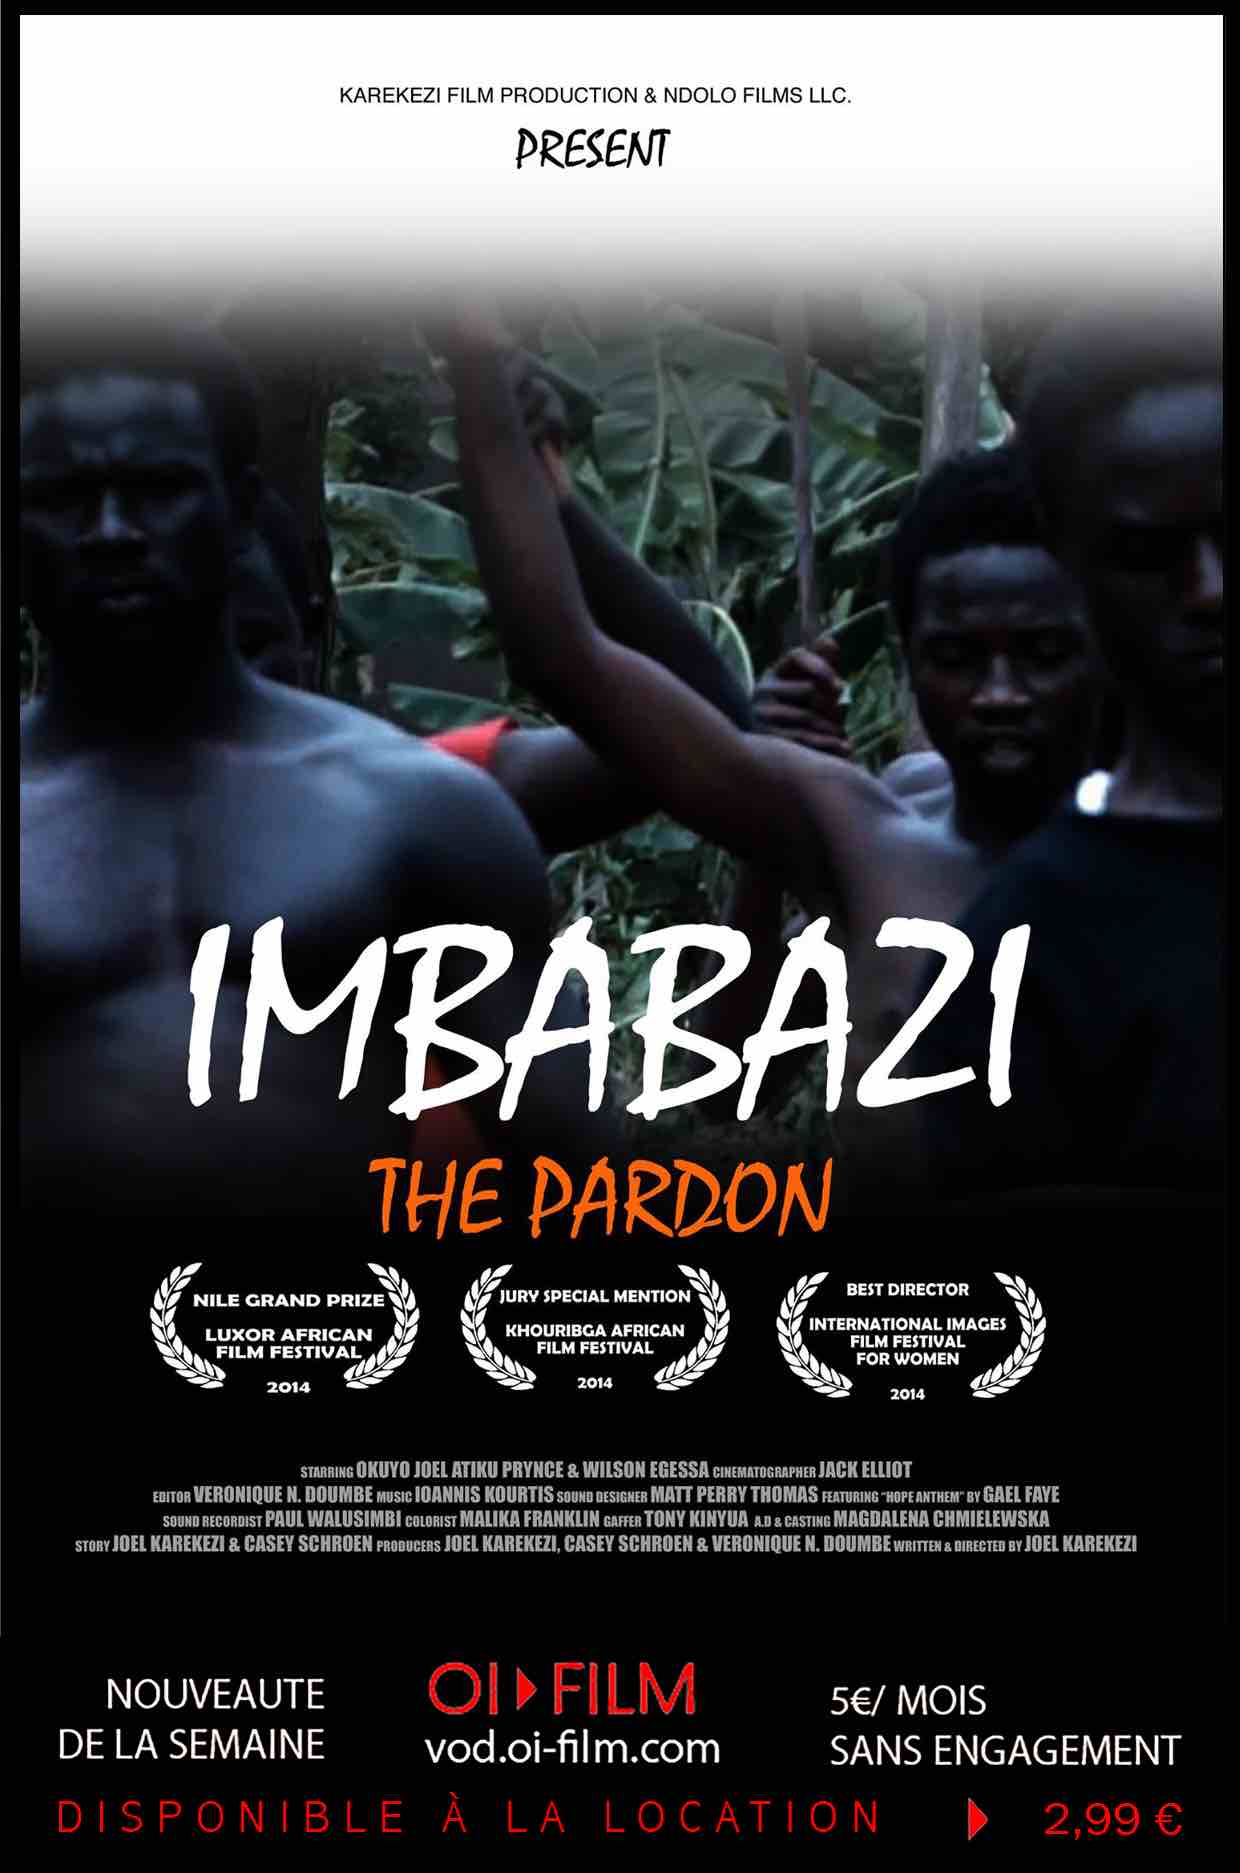 rwanda, génocide au rwanda, imbabazy le pardon, Joel kerakezy, film rwanda, uttu, tutsi, film sur le génocide au rwanda, oi film, cinéma indépendant, cinéma d'Afrique